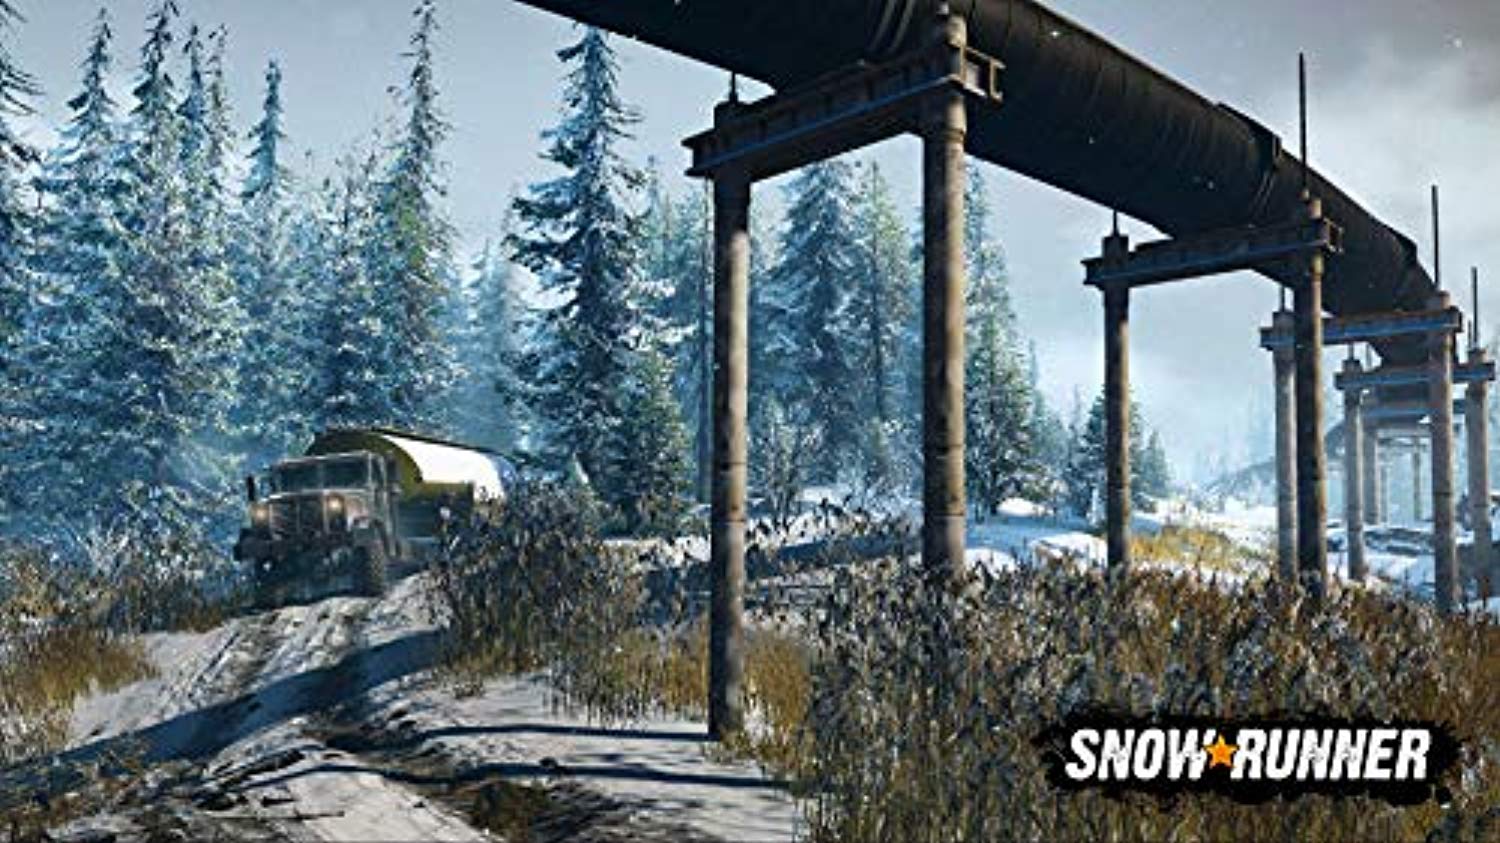 Snowrunner - Premium Edition (PS4) - Offer Games